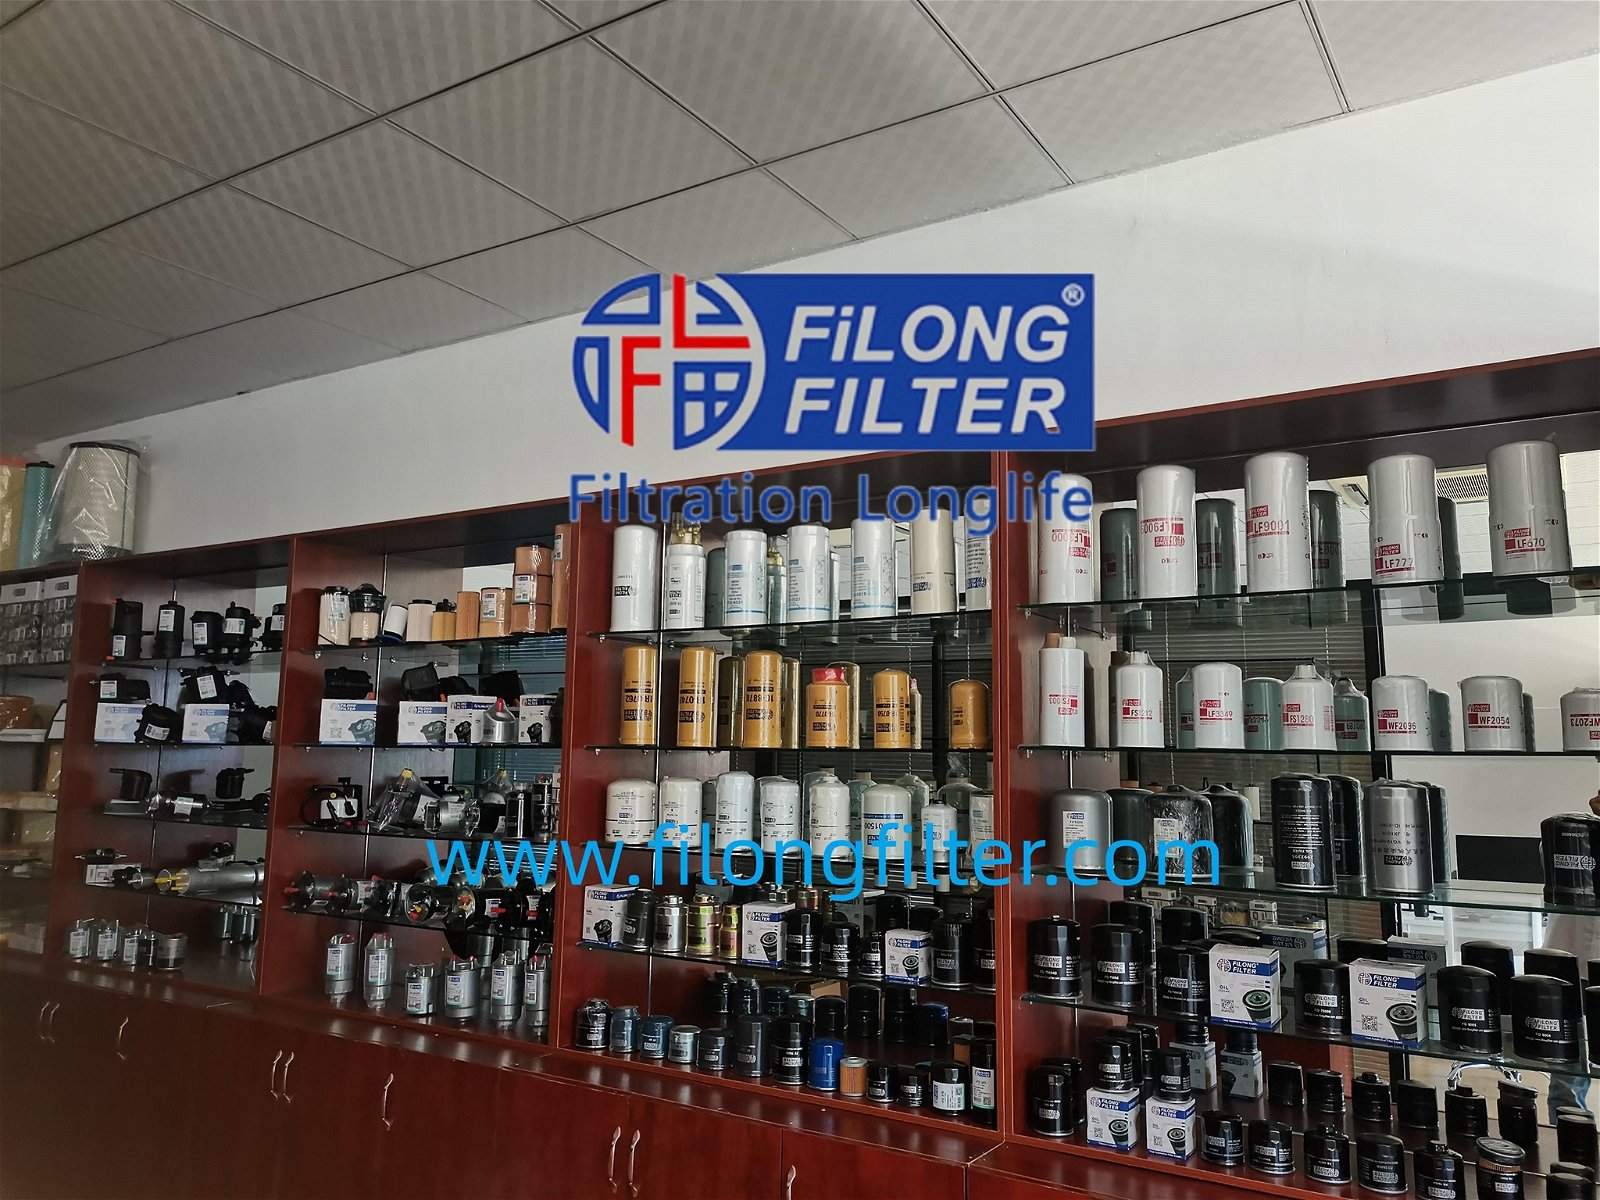 FILONGFILTER Manufacturer supply all kinds of replace filter for :AGCO FILTER，ATLAS COPCO FILTER，BALDWIN FILTER，BOMAG FILTER，CATERPILLAR FILTER，CNH FILTER，CASE IH FILTER，NEW HOLLAND FILTER，IVECO FILTER，CUMMINS-FLEETGUARD ，DAF FILTER，DEUTZ FILTER，DONALDSON FILTER，DONGFENG TRUCK FILTER， DOOSAN ，DAEWOO， FILTERFAW FILTER，FG WILSON FILTER，FORD FILTER，FOTON FILTER，HENGST FILTER，HINO FILTER，HITACHI FILTER，HYUNDAI FILTER，HYVA FILTER，ISUZU FILTER，IVECO FILTER，JCB FILTER，JOHN DEERE FILTER，KING LONG HIGER， KOBELCO FILTER，KOMATSU FILTER，KUBOTA FILTER，LIUGONG FILTER，LH LEEMIN HYDRAULIC， MAN FILTER，MANN FILTER， ，MERCEDES BENZ FILTER，MITSUBISHI FILTER，MTU FILTER，NELSON FILTER，PARKER RACOR FILTER，PERKINS FILTER，PEUGEOT FILTER，RENAULT FILTER，SANY FILTER，TATA & Leyparts FILTER,SDEC/SHANGCHAI FILTER，SCANIA FILTER，SHACMAN/SHAANXI FILTER，SHANTUI FILTER，SINOTRUK HOWO FILTER，THERMO KING FILTER，TOYOTA FILTER，VOLVO FILTER，WEICHAI FILTER，XCMG FILTER，YANMAR FILTER，YUCHAI FILTER，KAESER FILTER，LIEBHERR FILTER，MP Filtri，SAIC-IVECO HONGYA